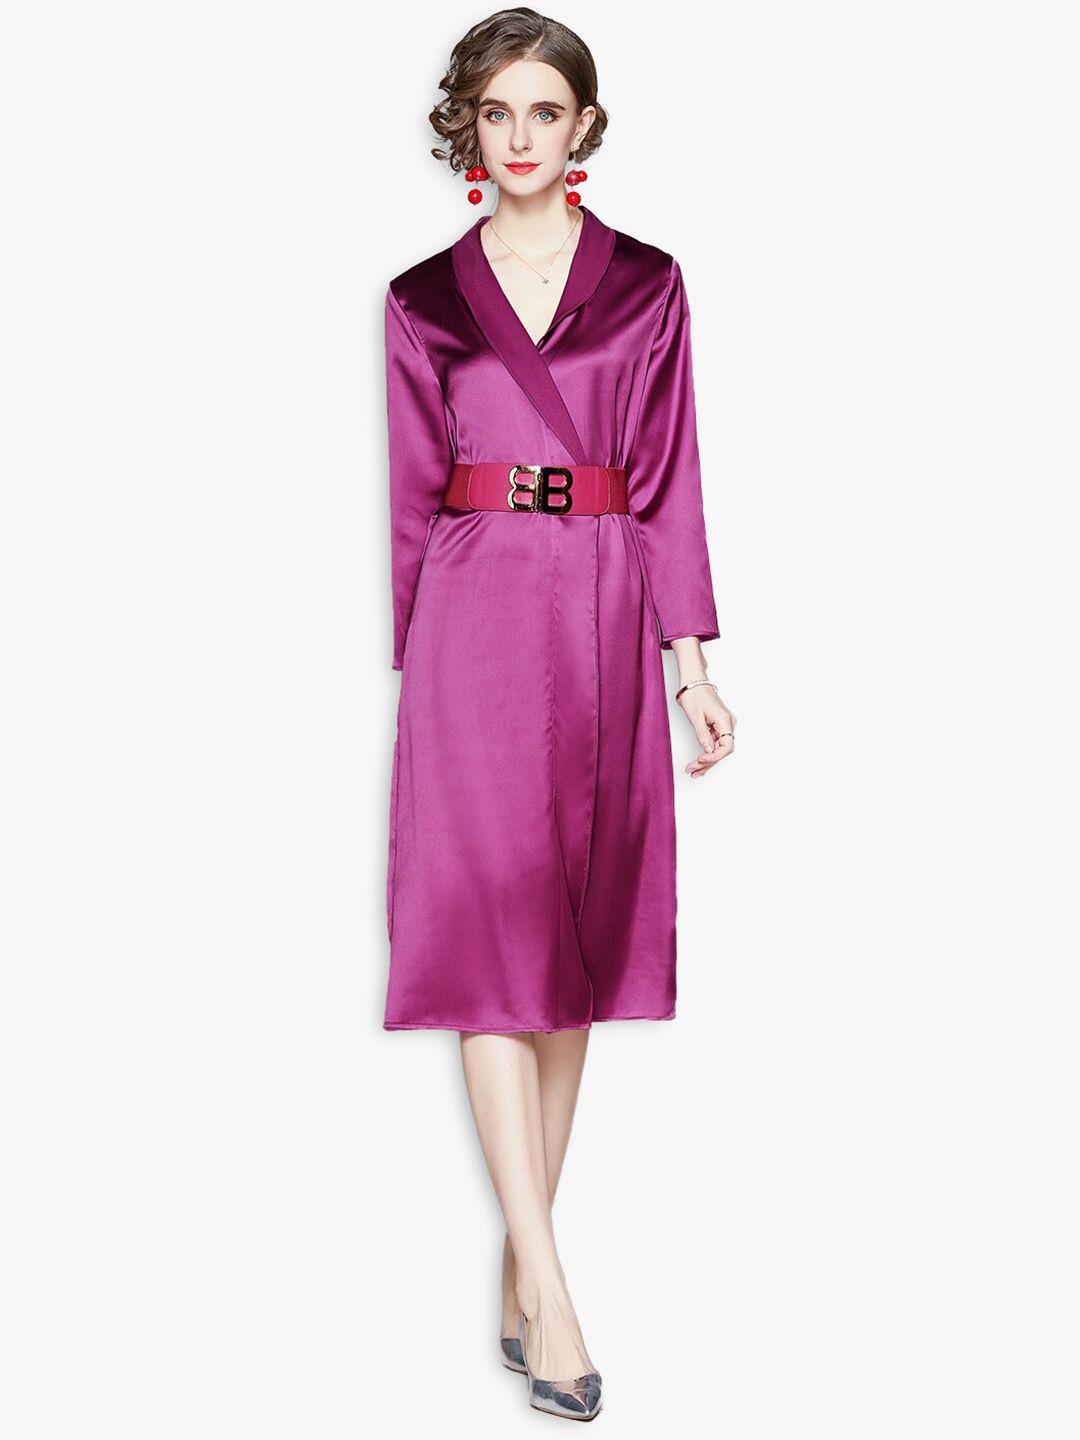 jc collection purple wrap dress